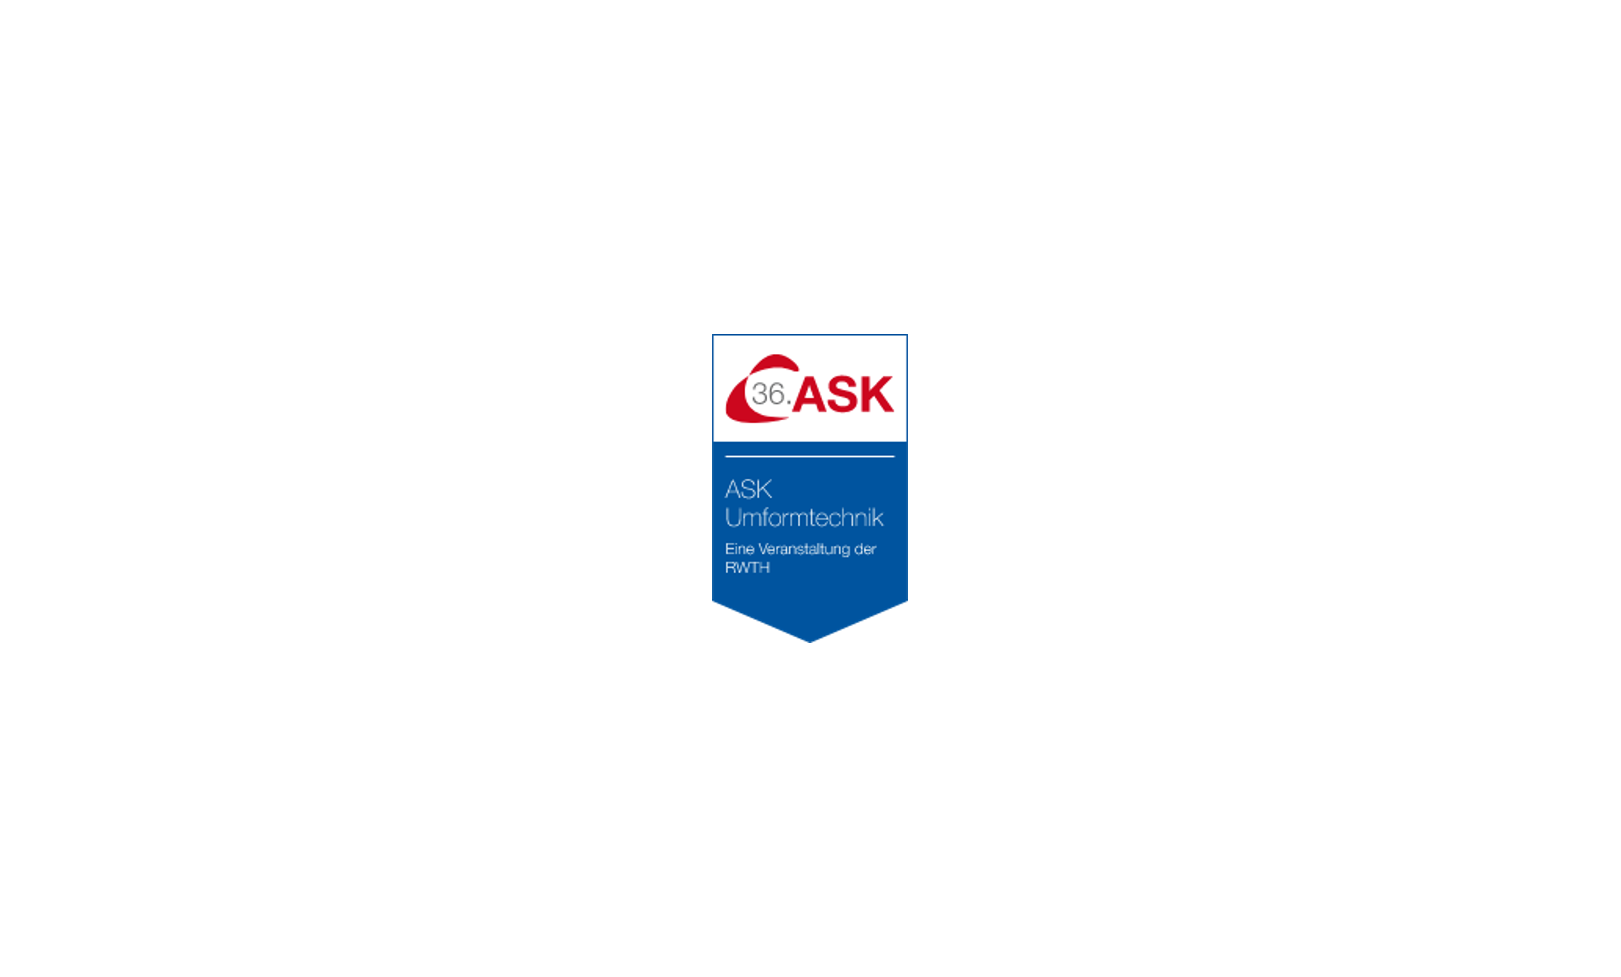 Logo ASK